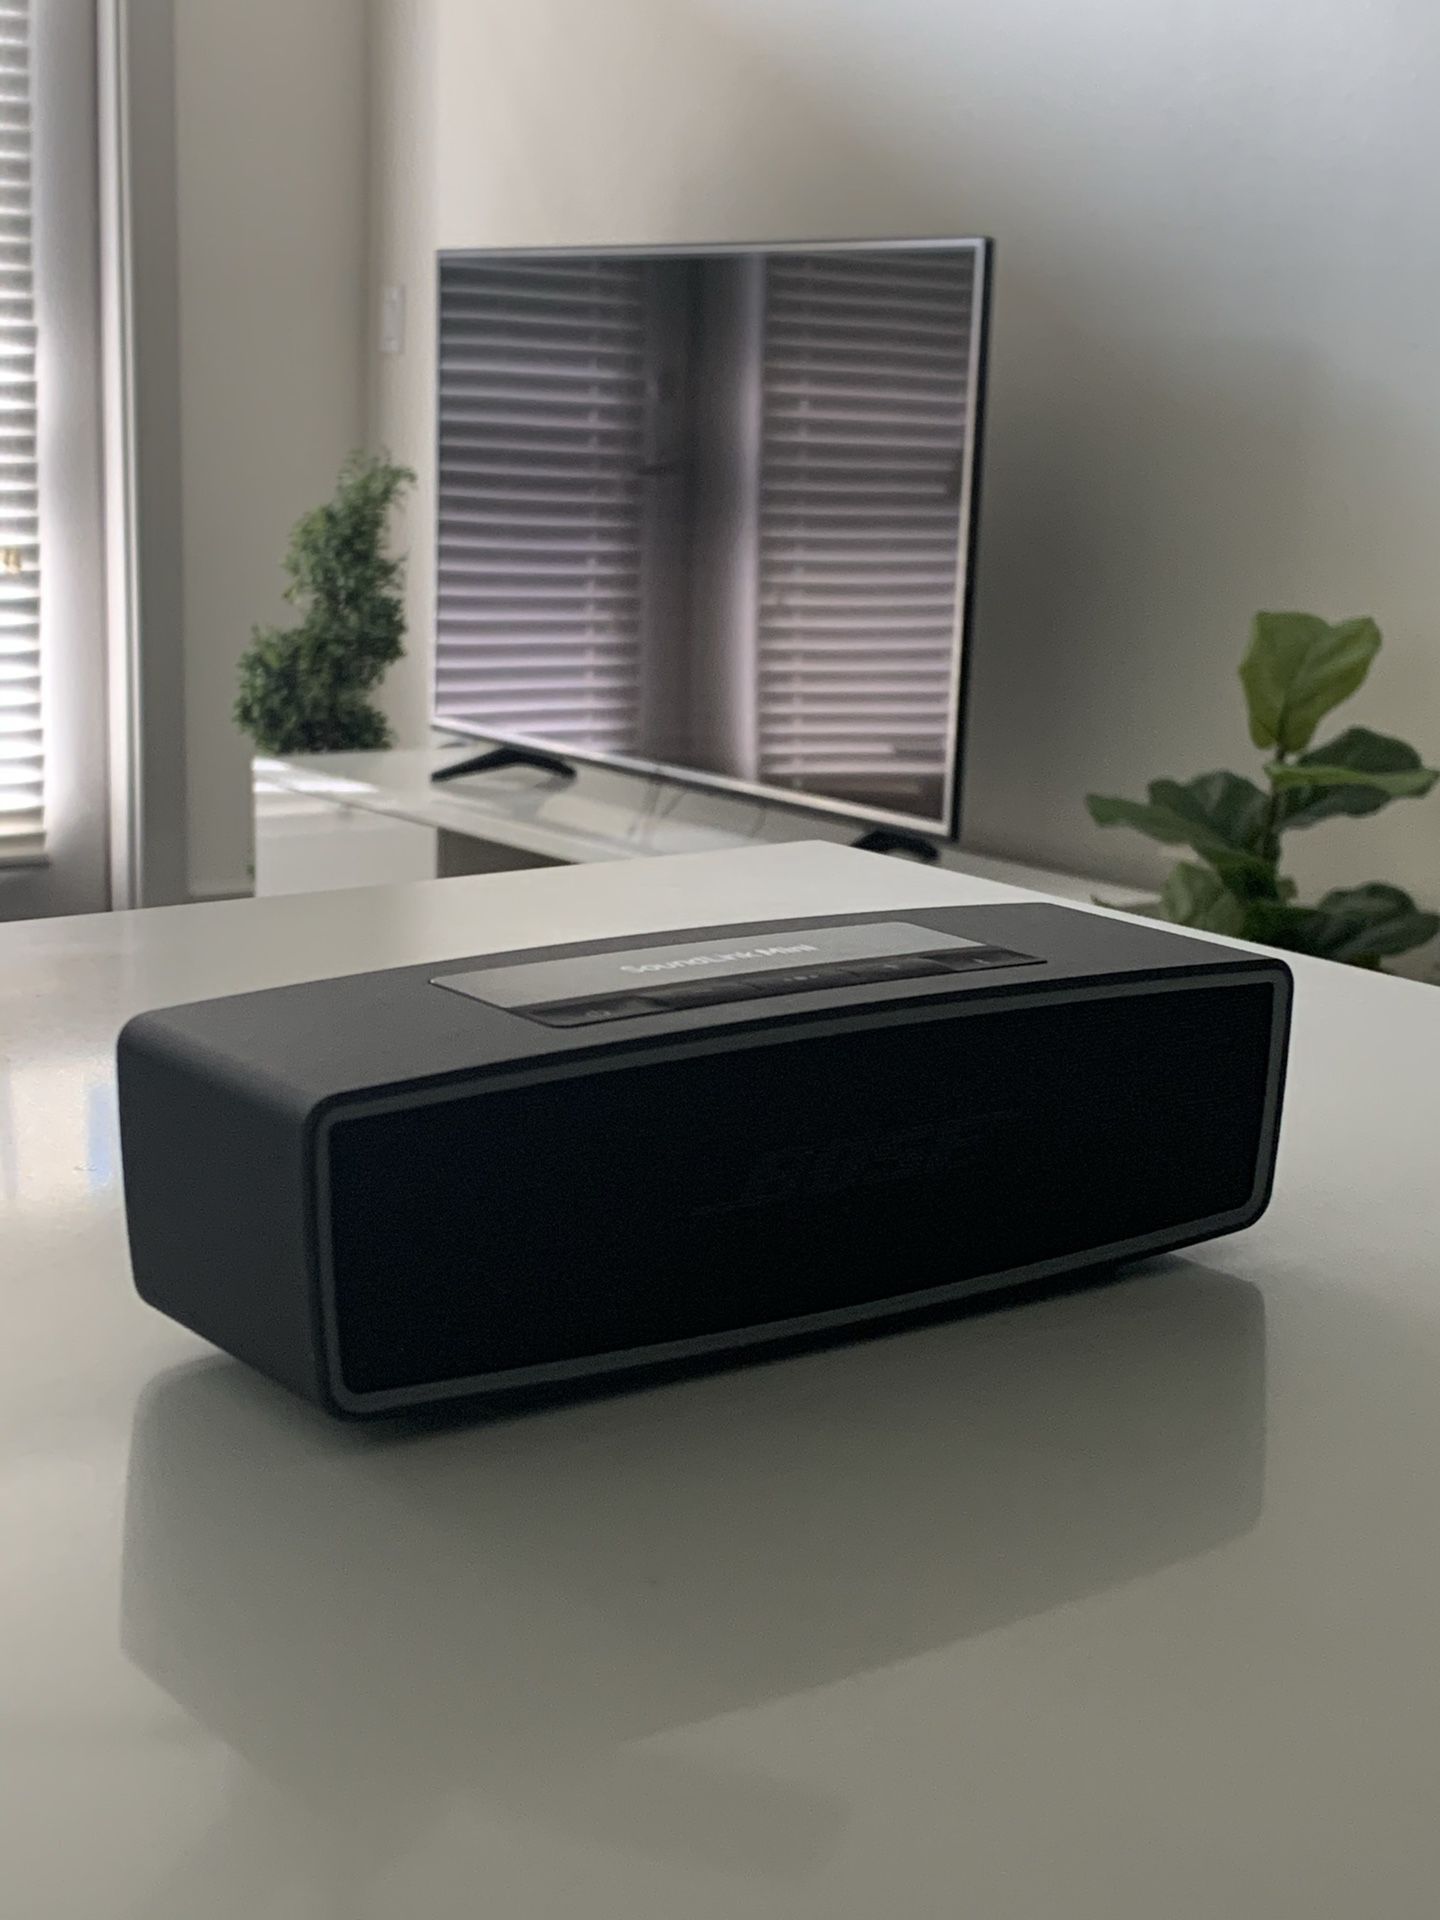 Bose SoundLink Mini Bluetooth Speaker II with Hard Case (Like New)